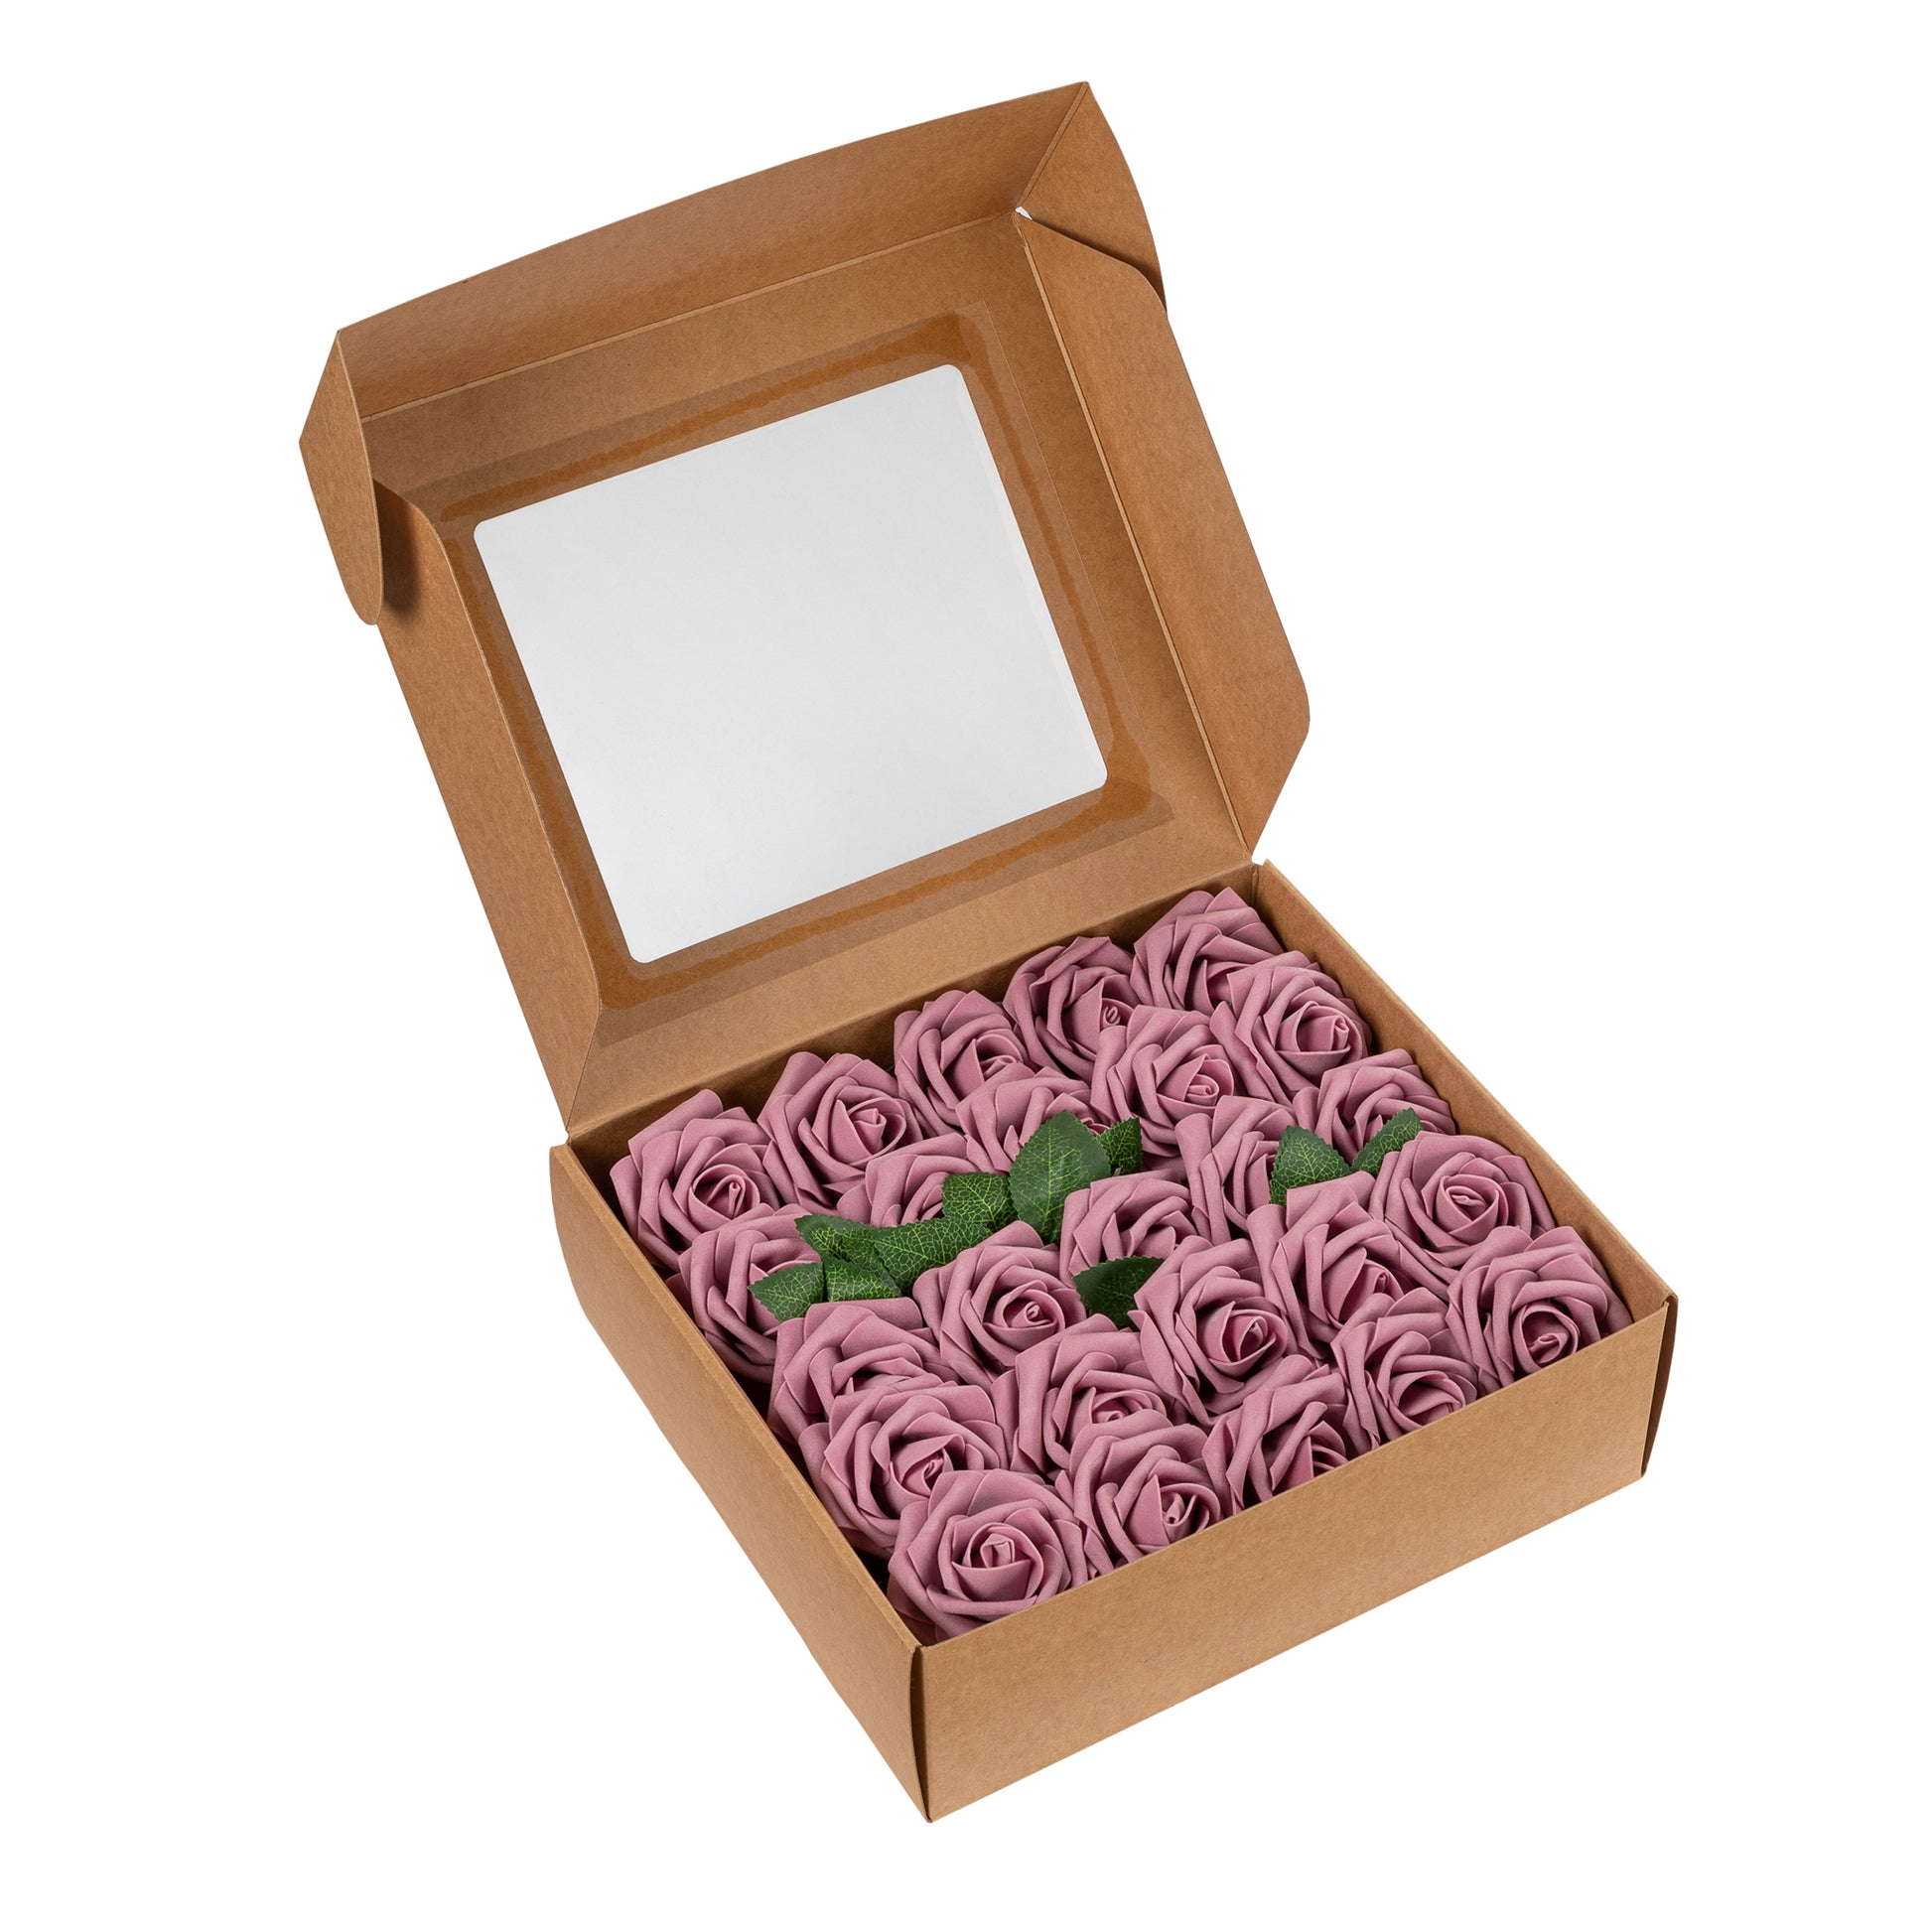 2 Fuchsia Big Rose Paper Craft Flowers - Pack of 12